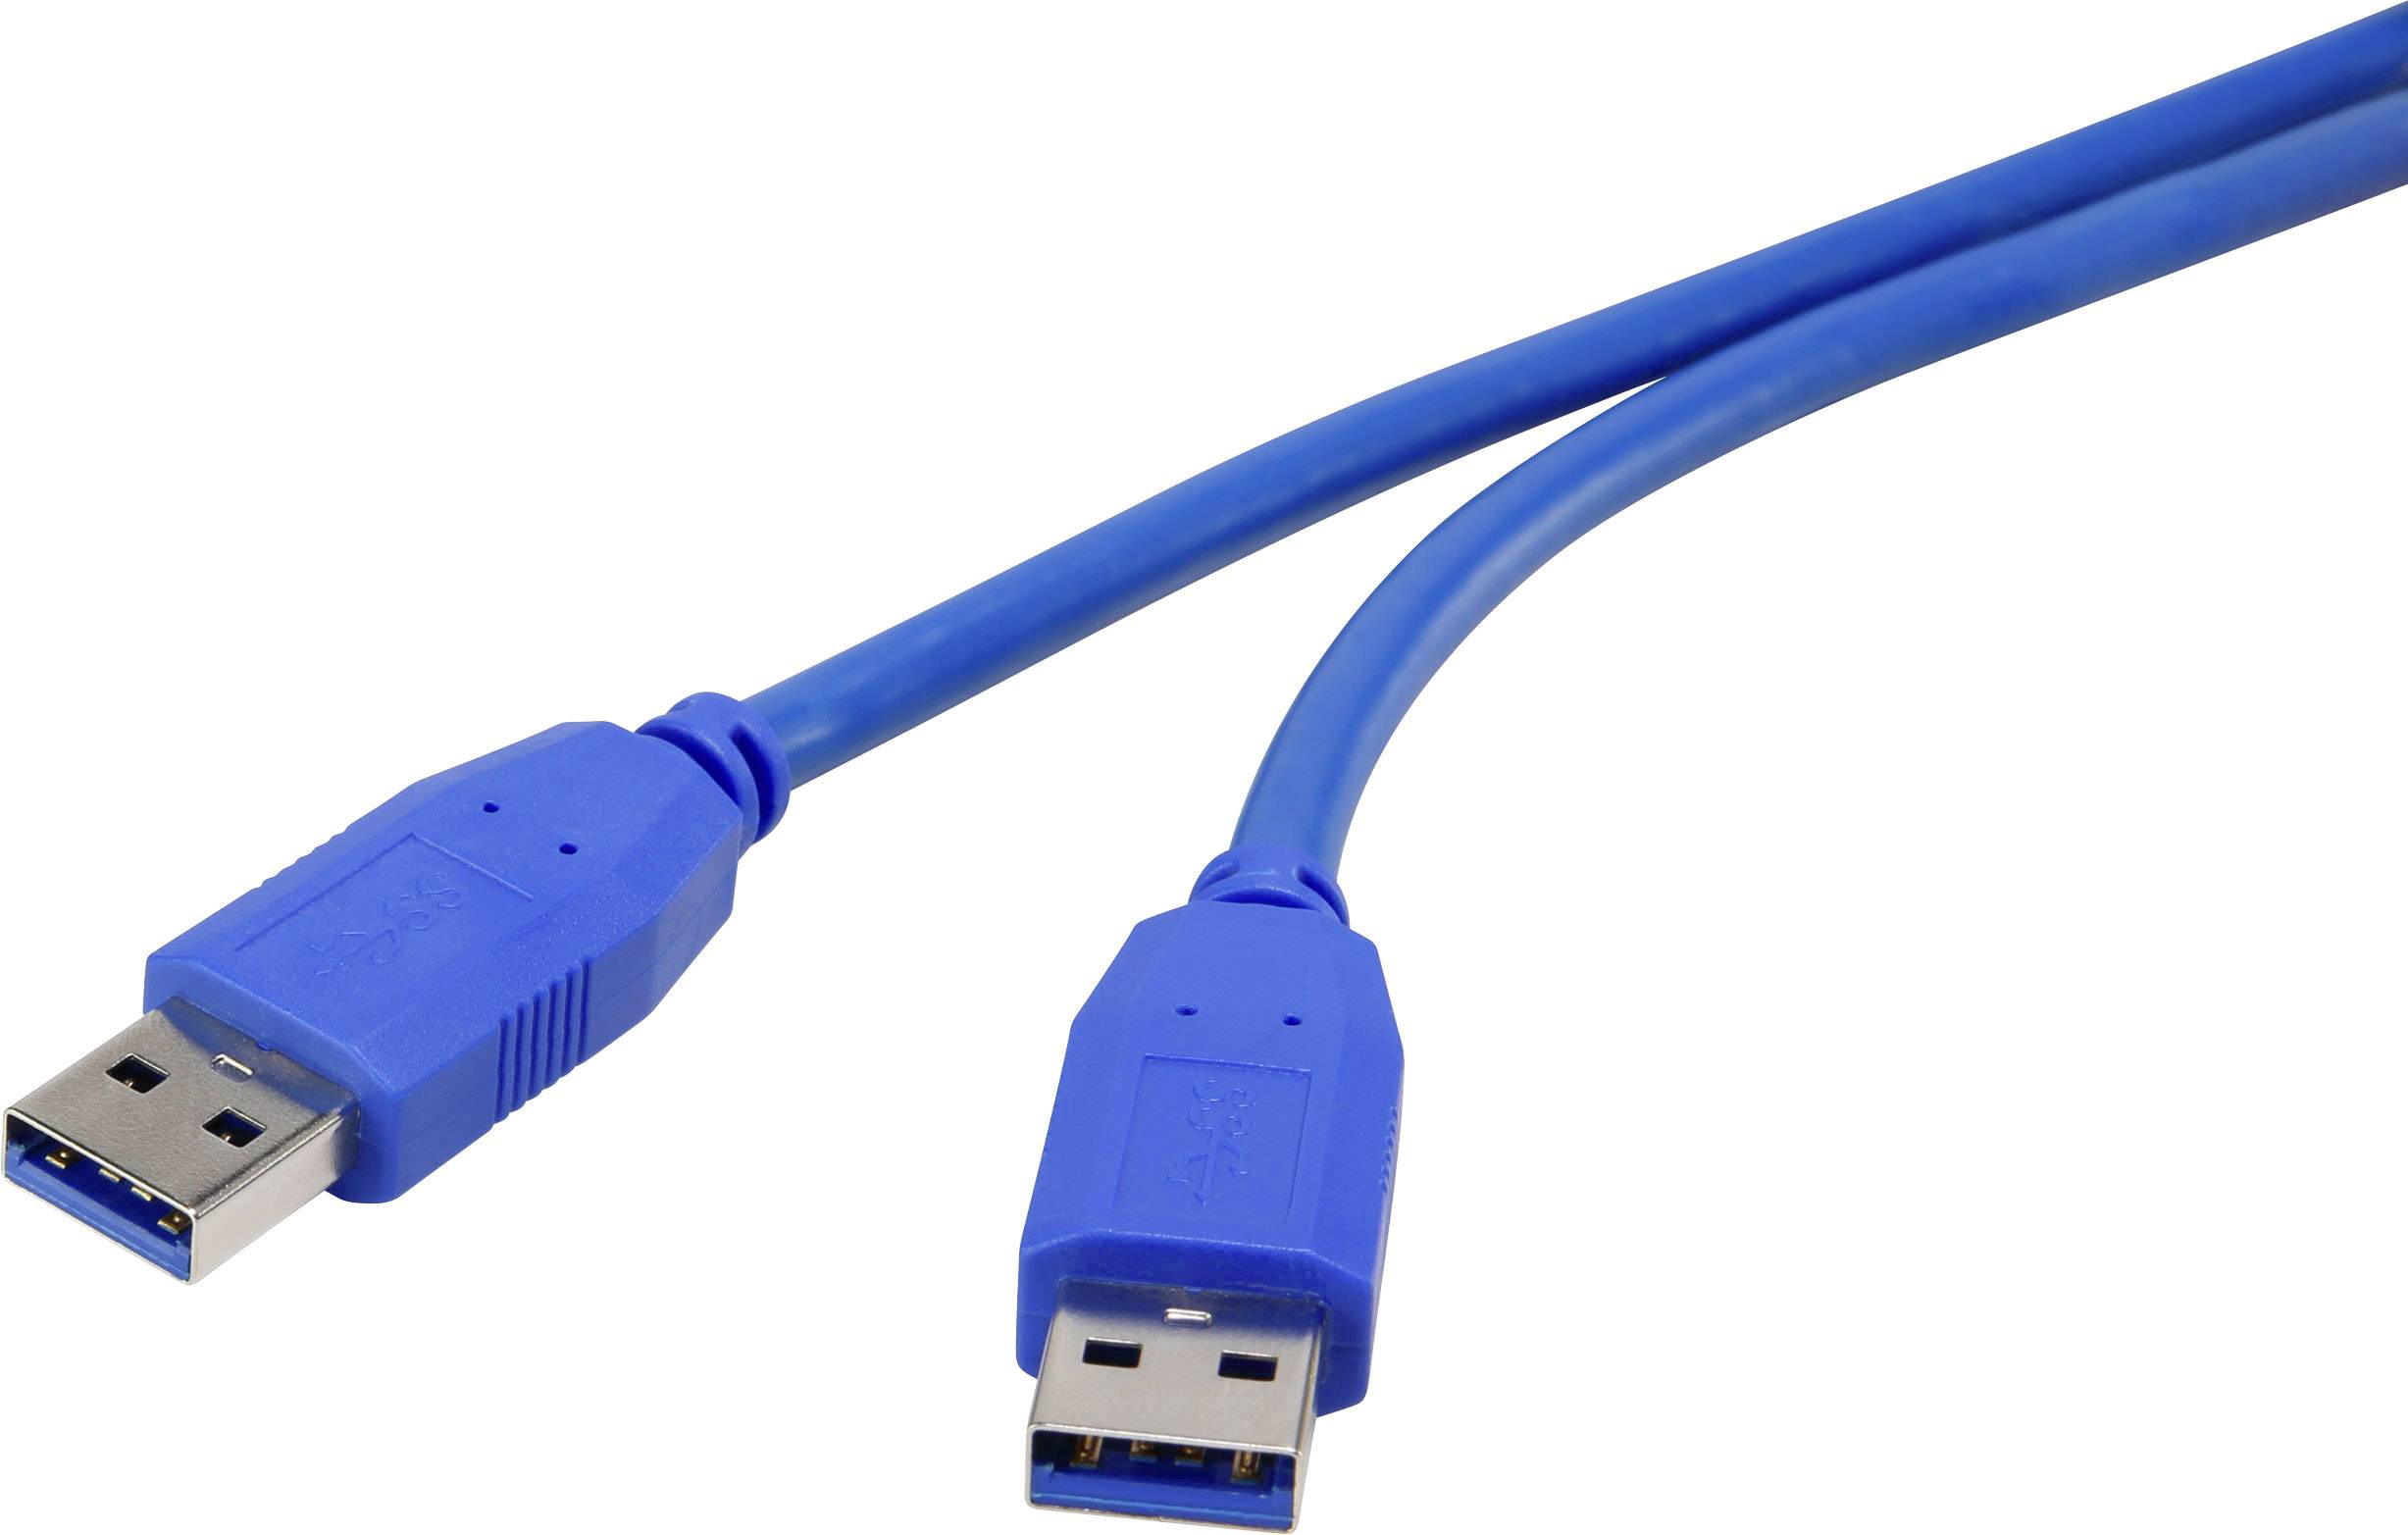 CONRAD Renkforce USB 3.0 Kabel [1x USB 3.0 Stecker A - 1x USB 3.0 Stecker A] 1 m Blau vergoldete Ste